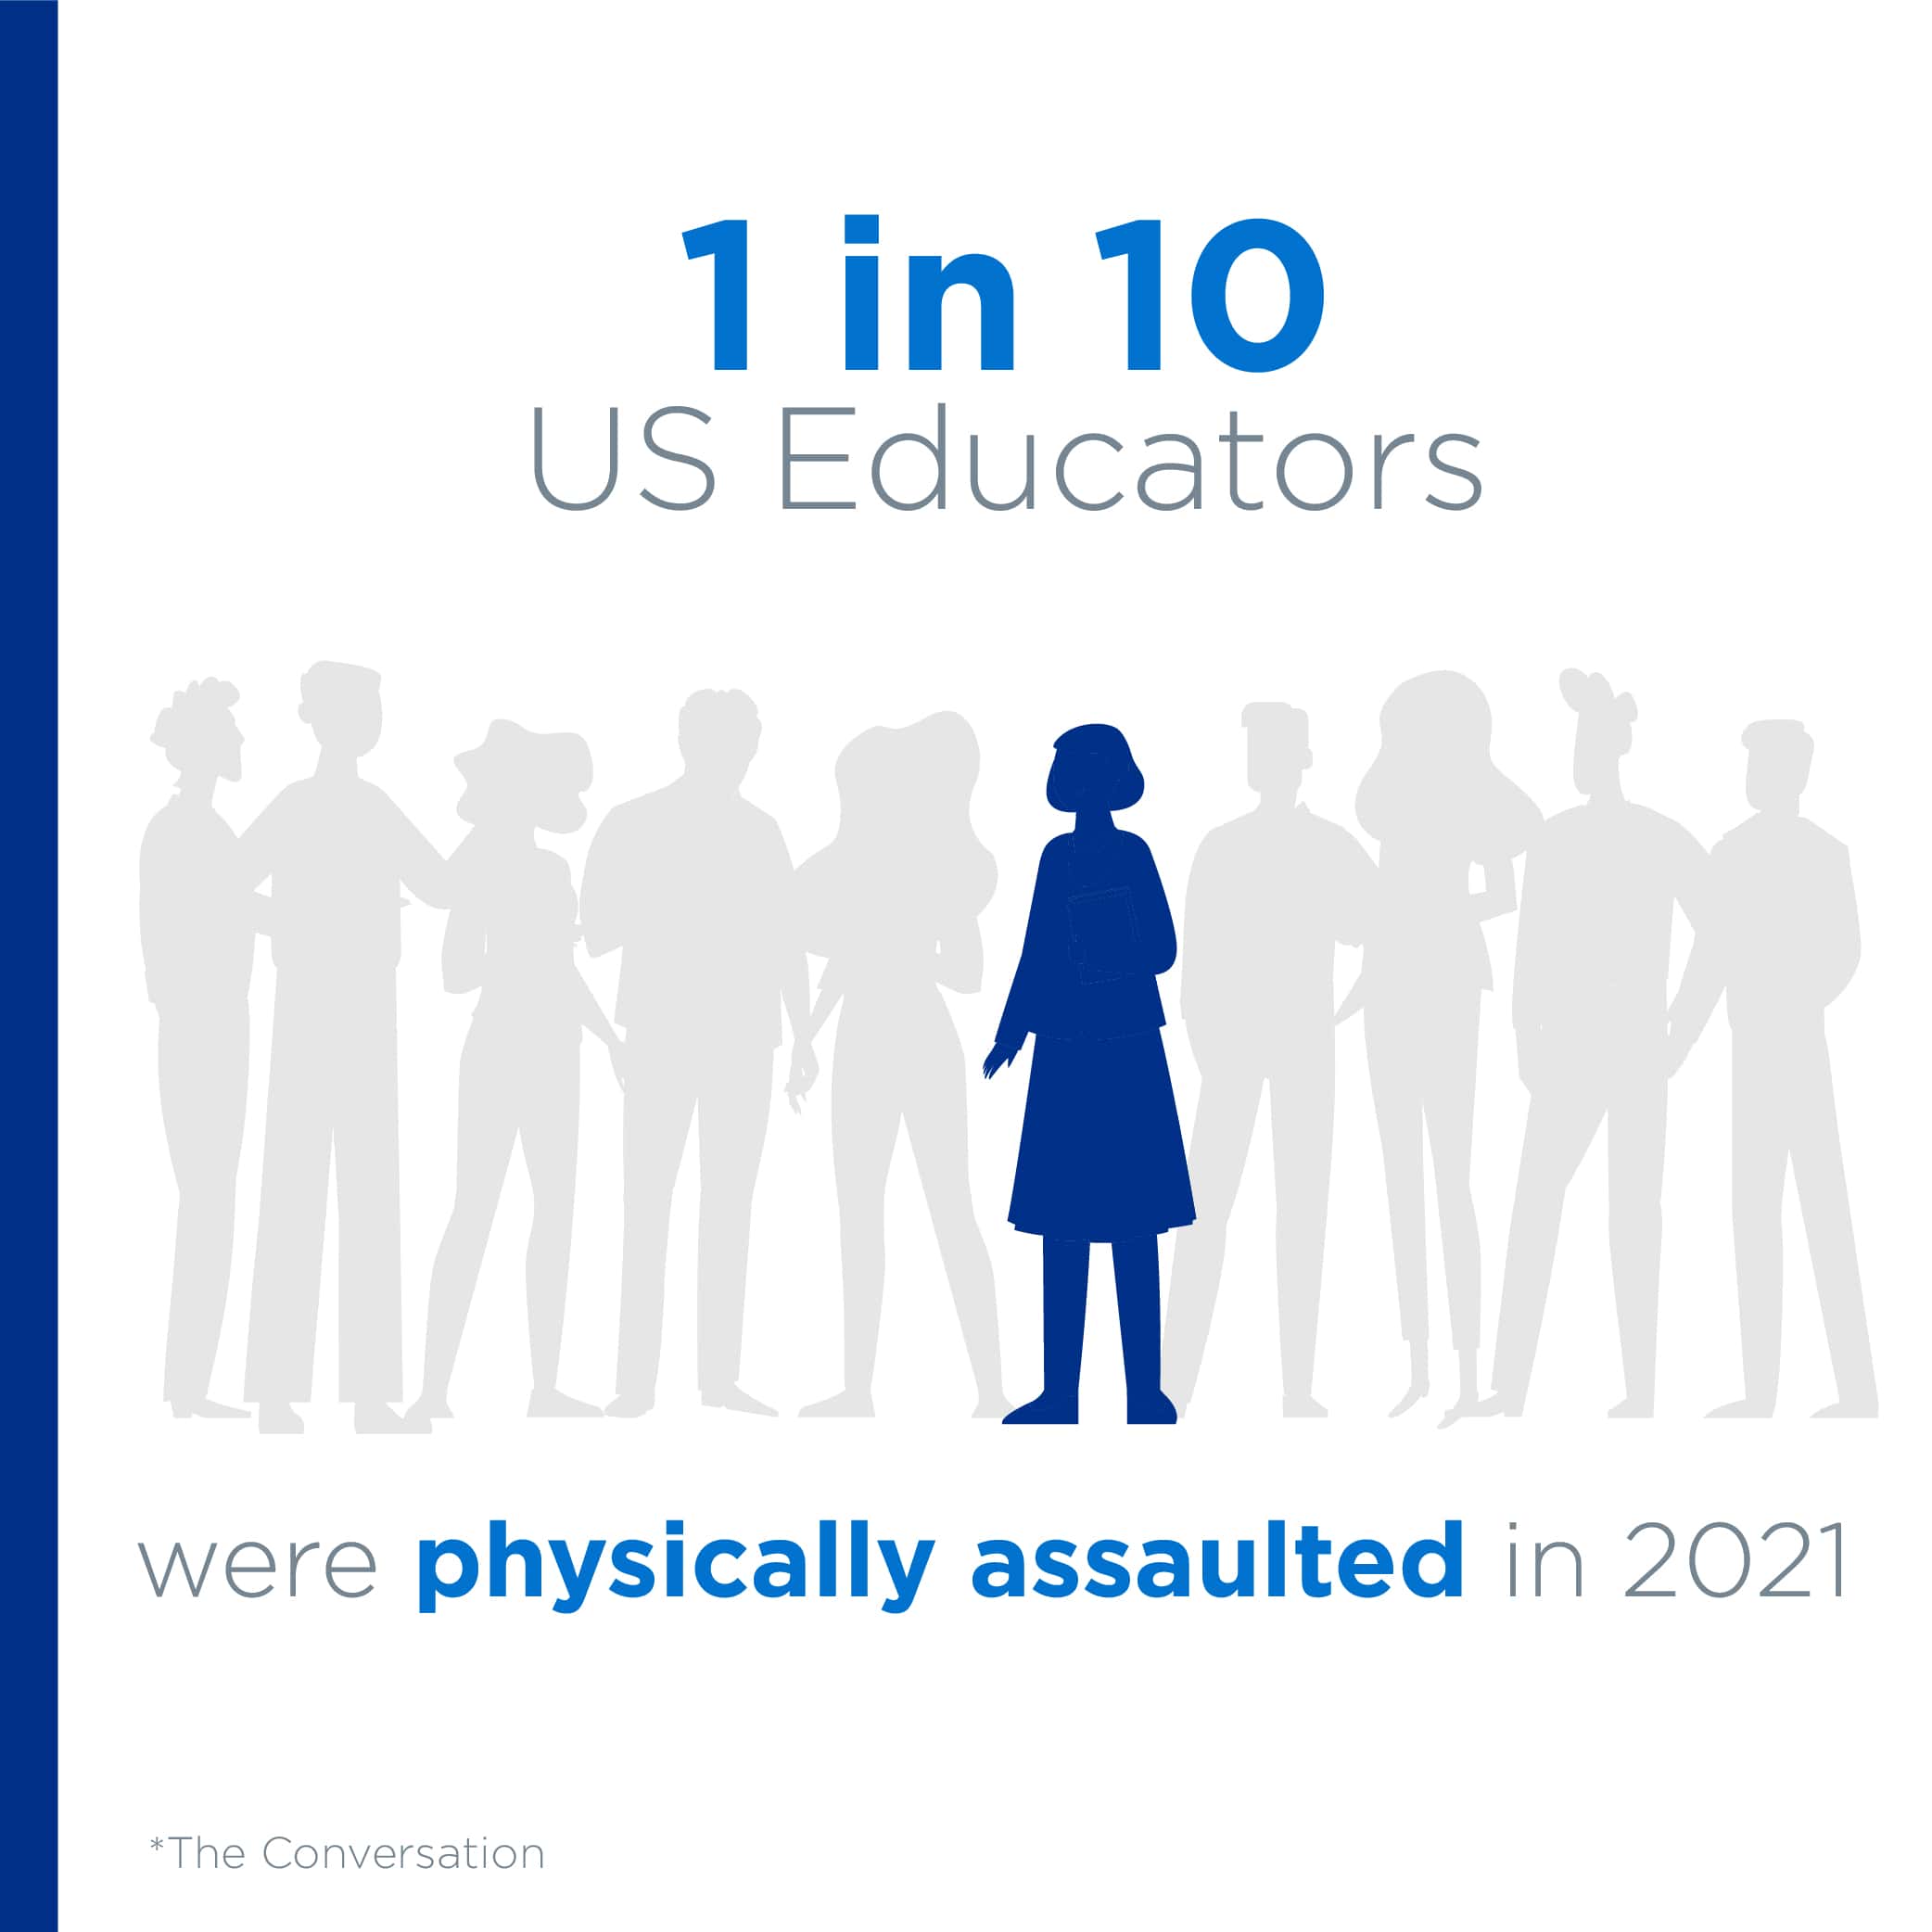 USA Educators physically assaulted